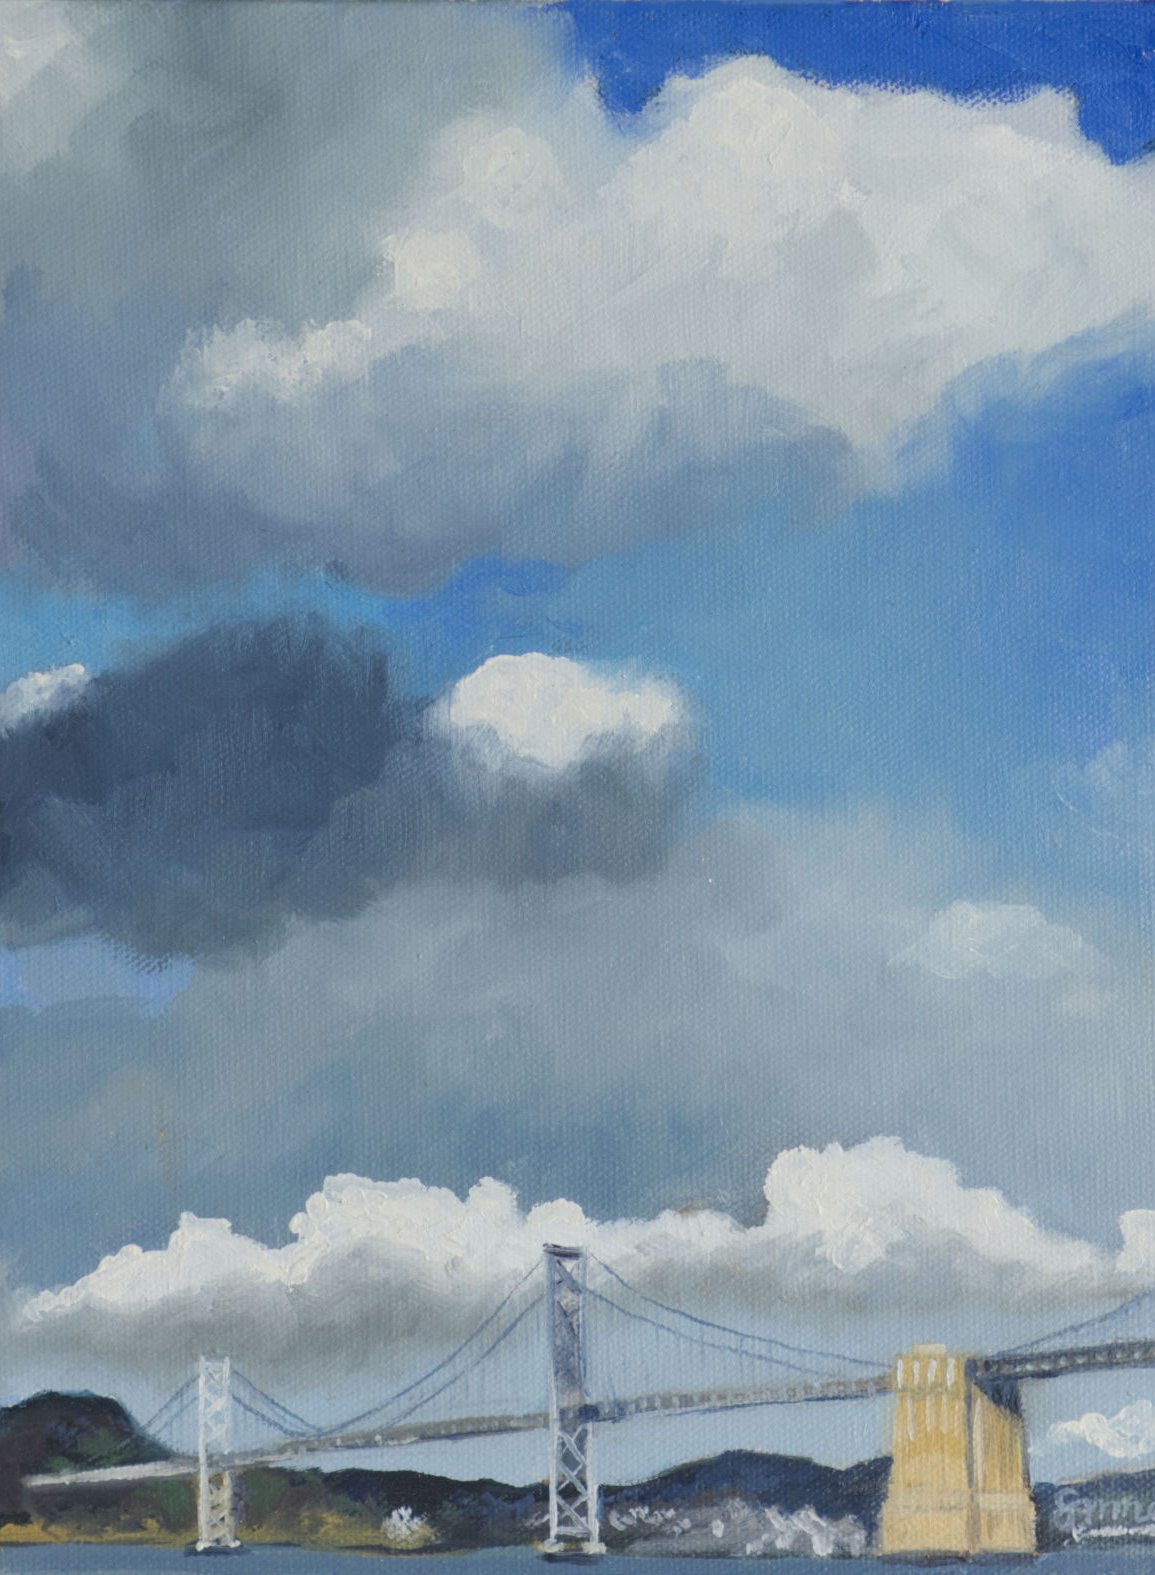 Clouds over the Bay Bridge by Susanne Friedrich